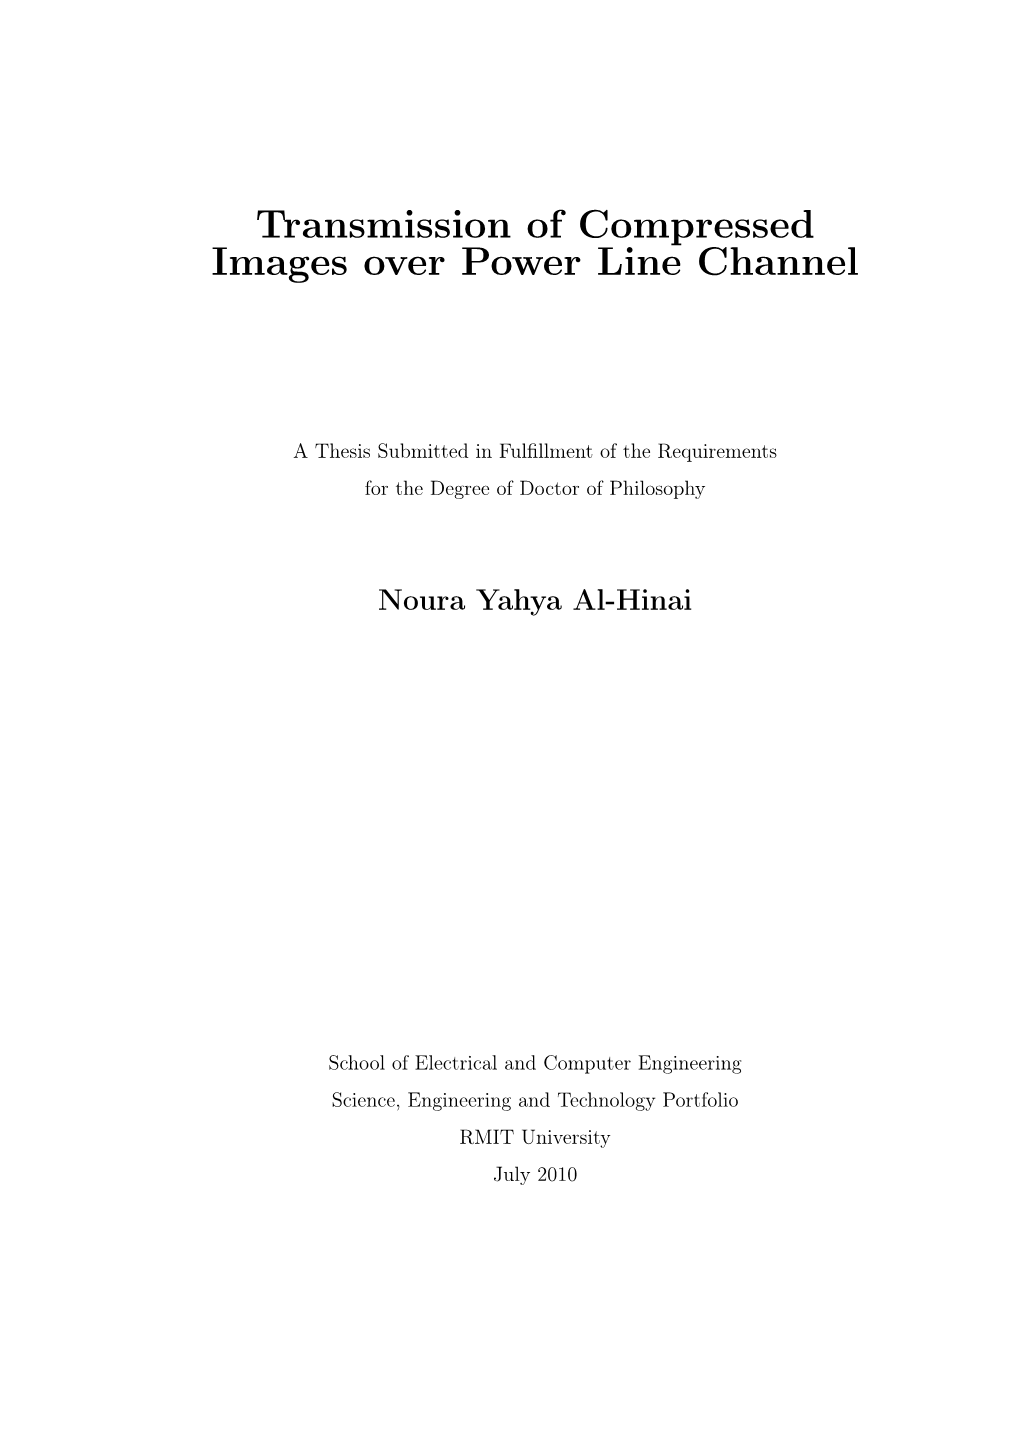 Transmission of Compressed Images Over Power Line Channel